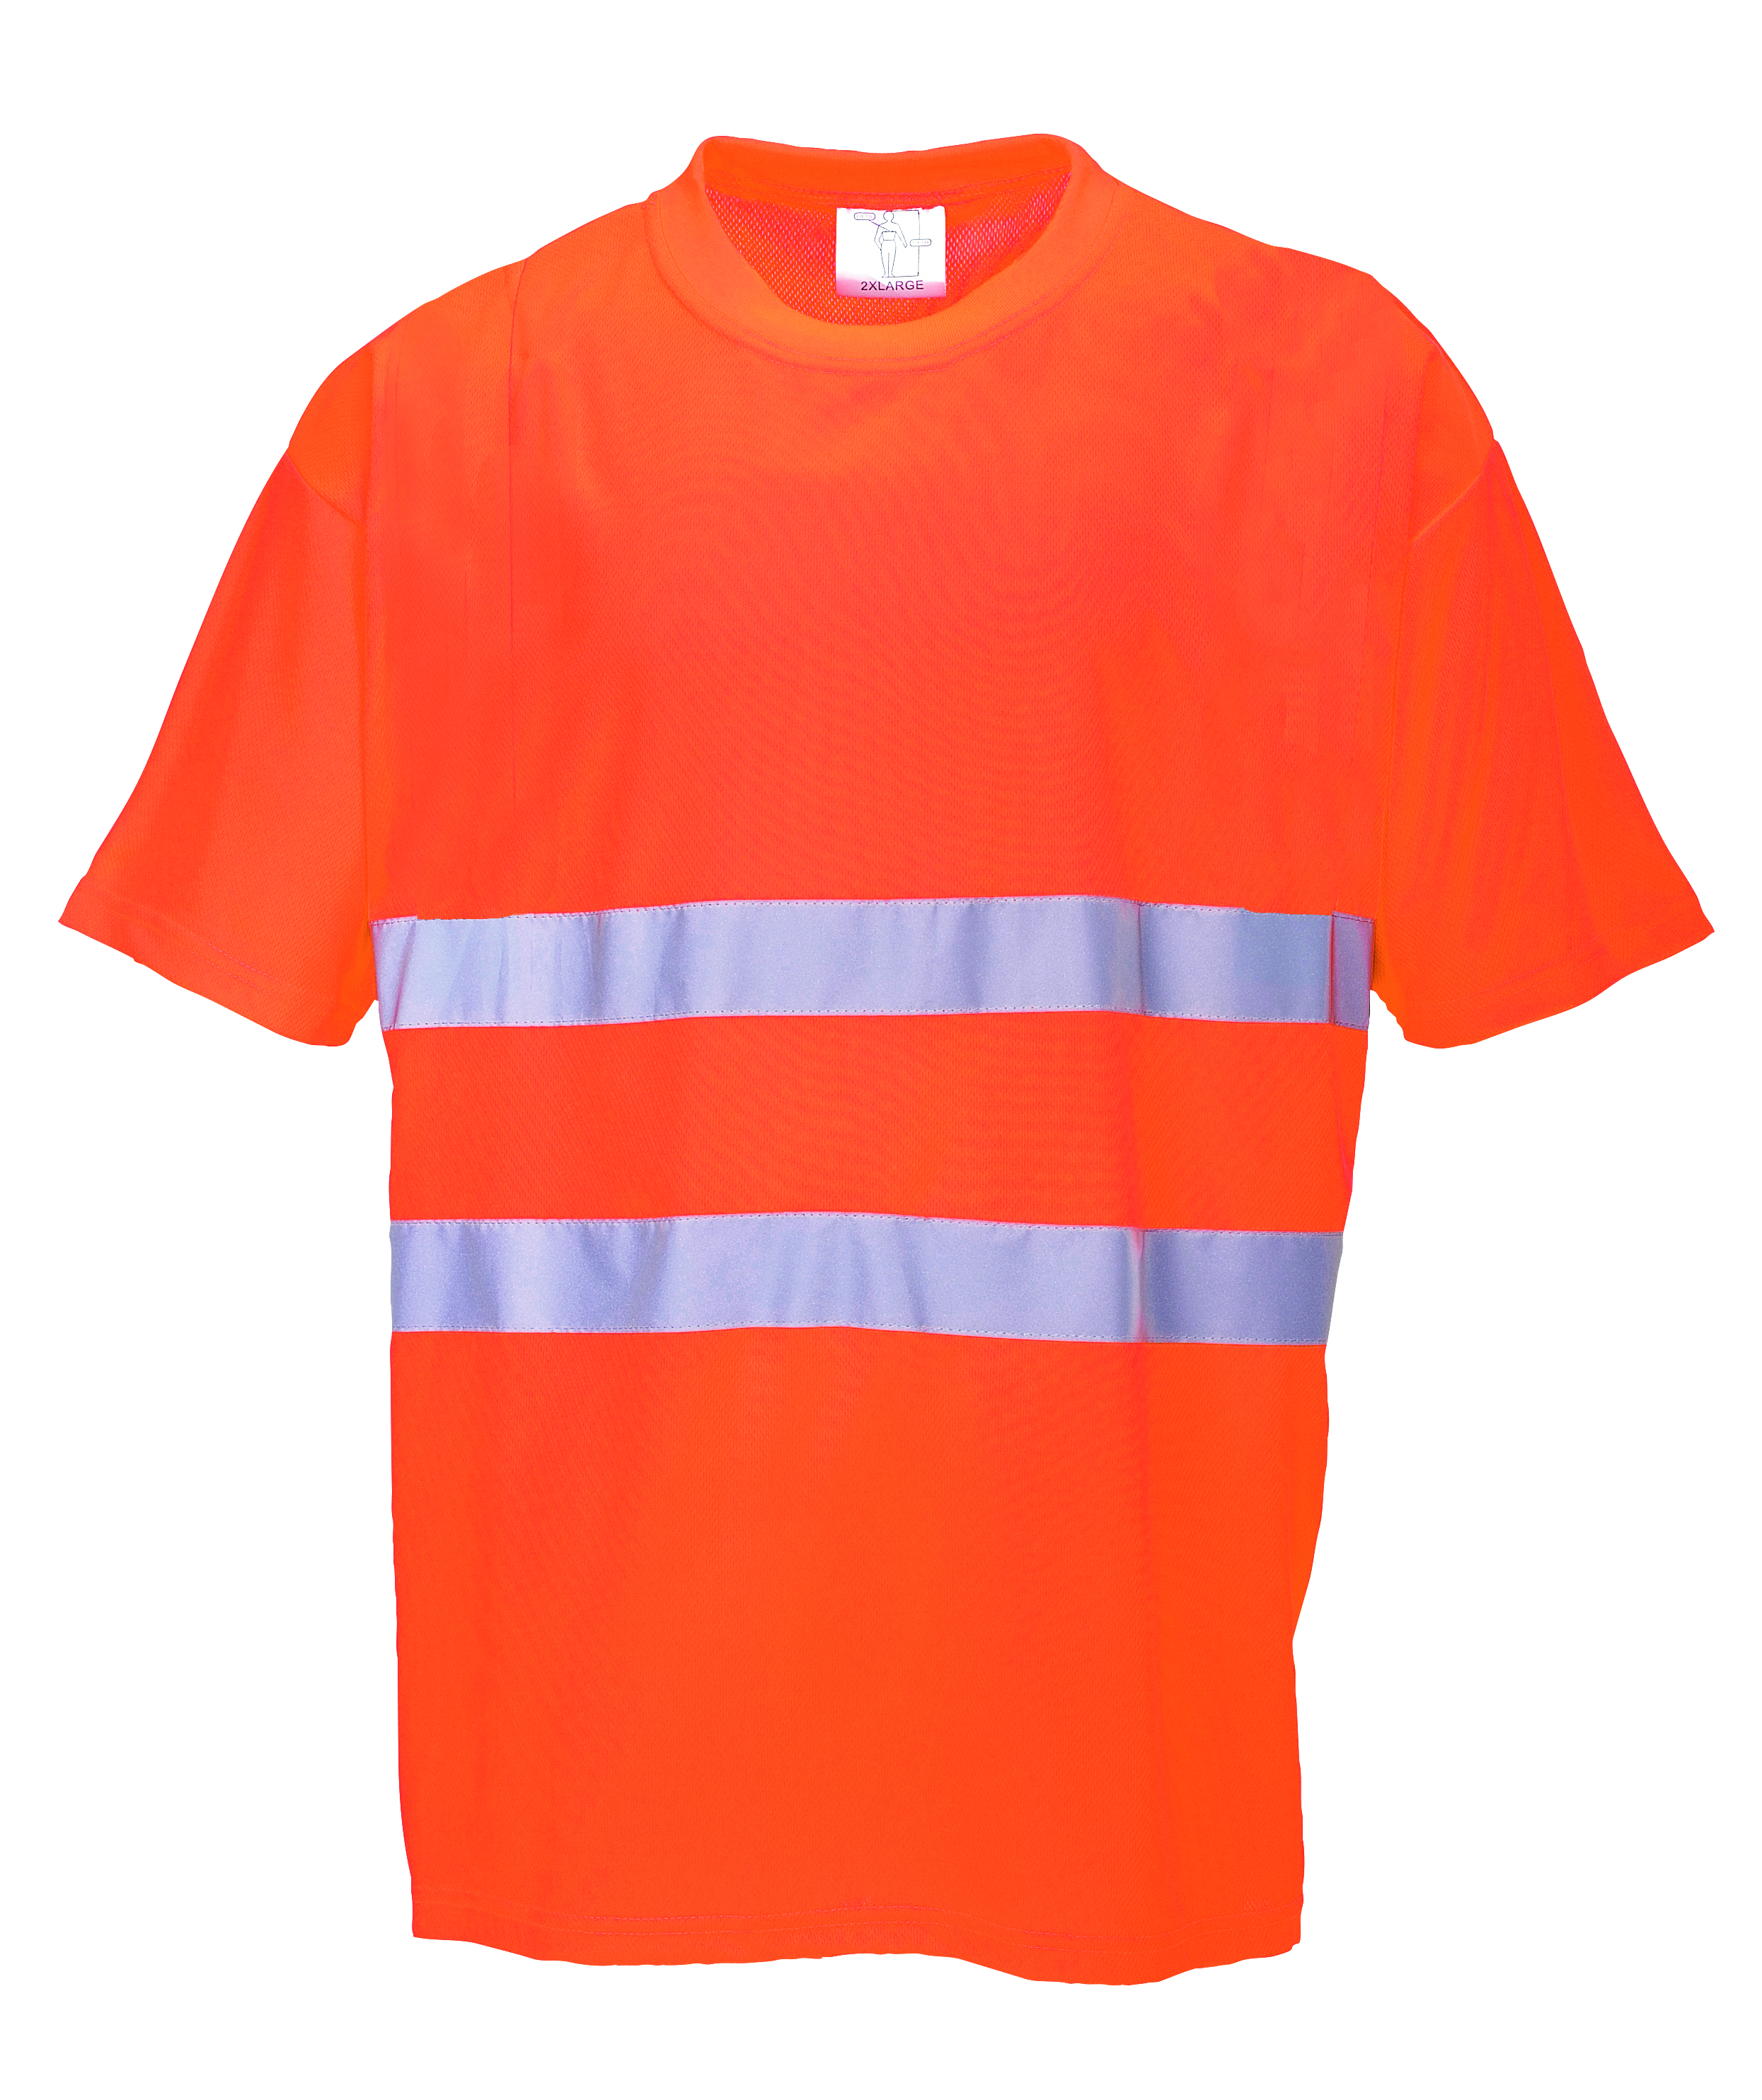 ax-httpss3.eu-west-2.amazonaws.comwebsystemstmp_for_downloadportwest-cotton-comfort-t-shirt-orange.jpeg